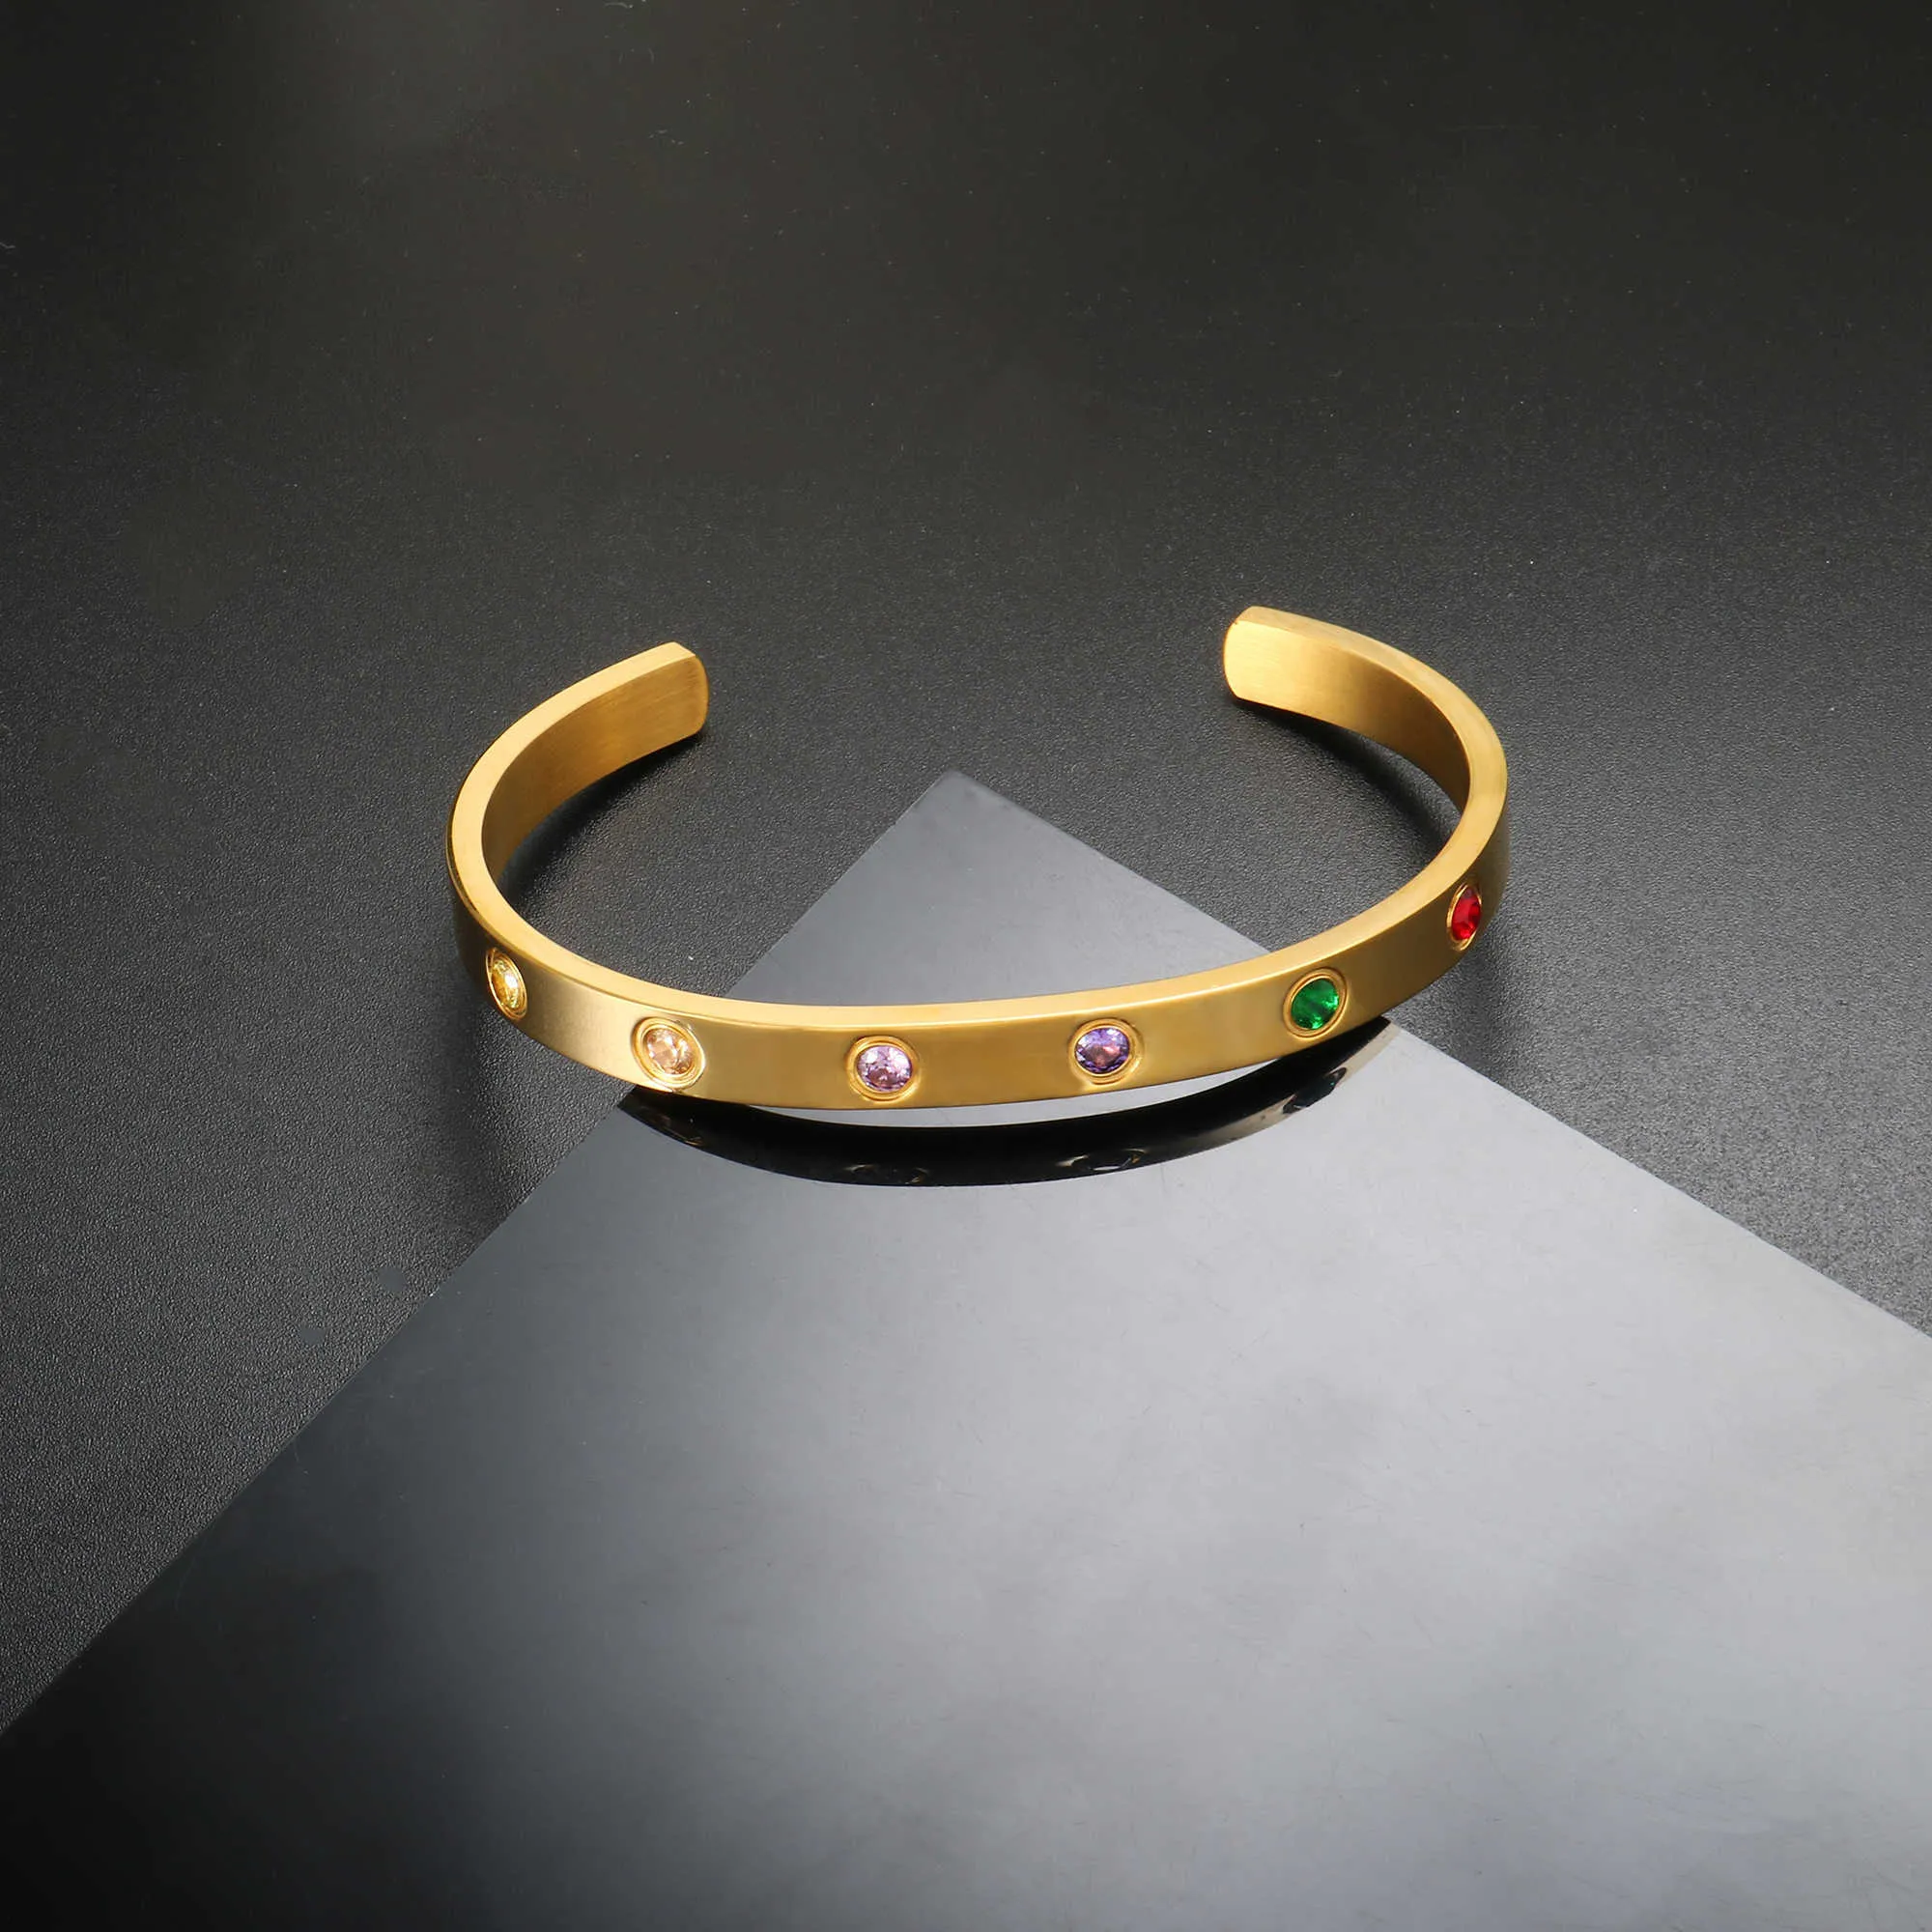 NIEUWE Design C Manchet Armbanden 2021 Trendy Punk ins Jewelry Populair Vriendelijk Gift Kleurrijke Stone CZ Filled Bangle Cuff for Lady Q0719